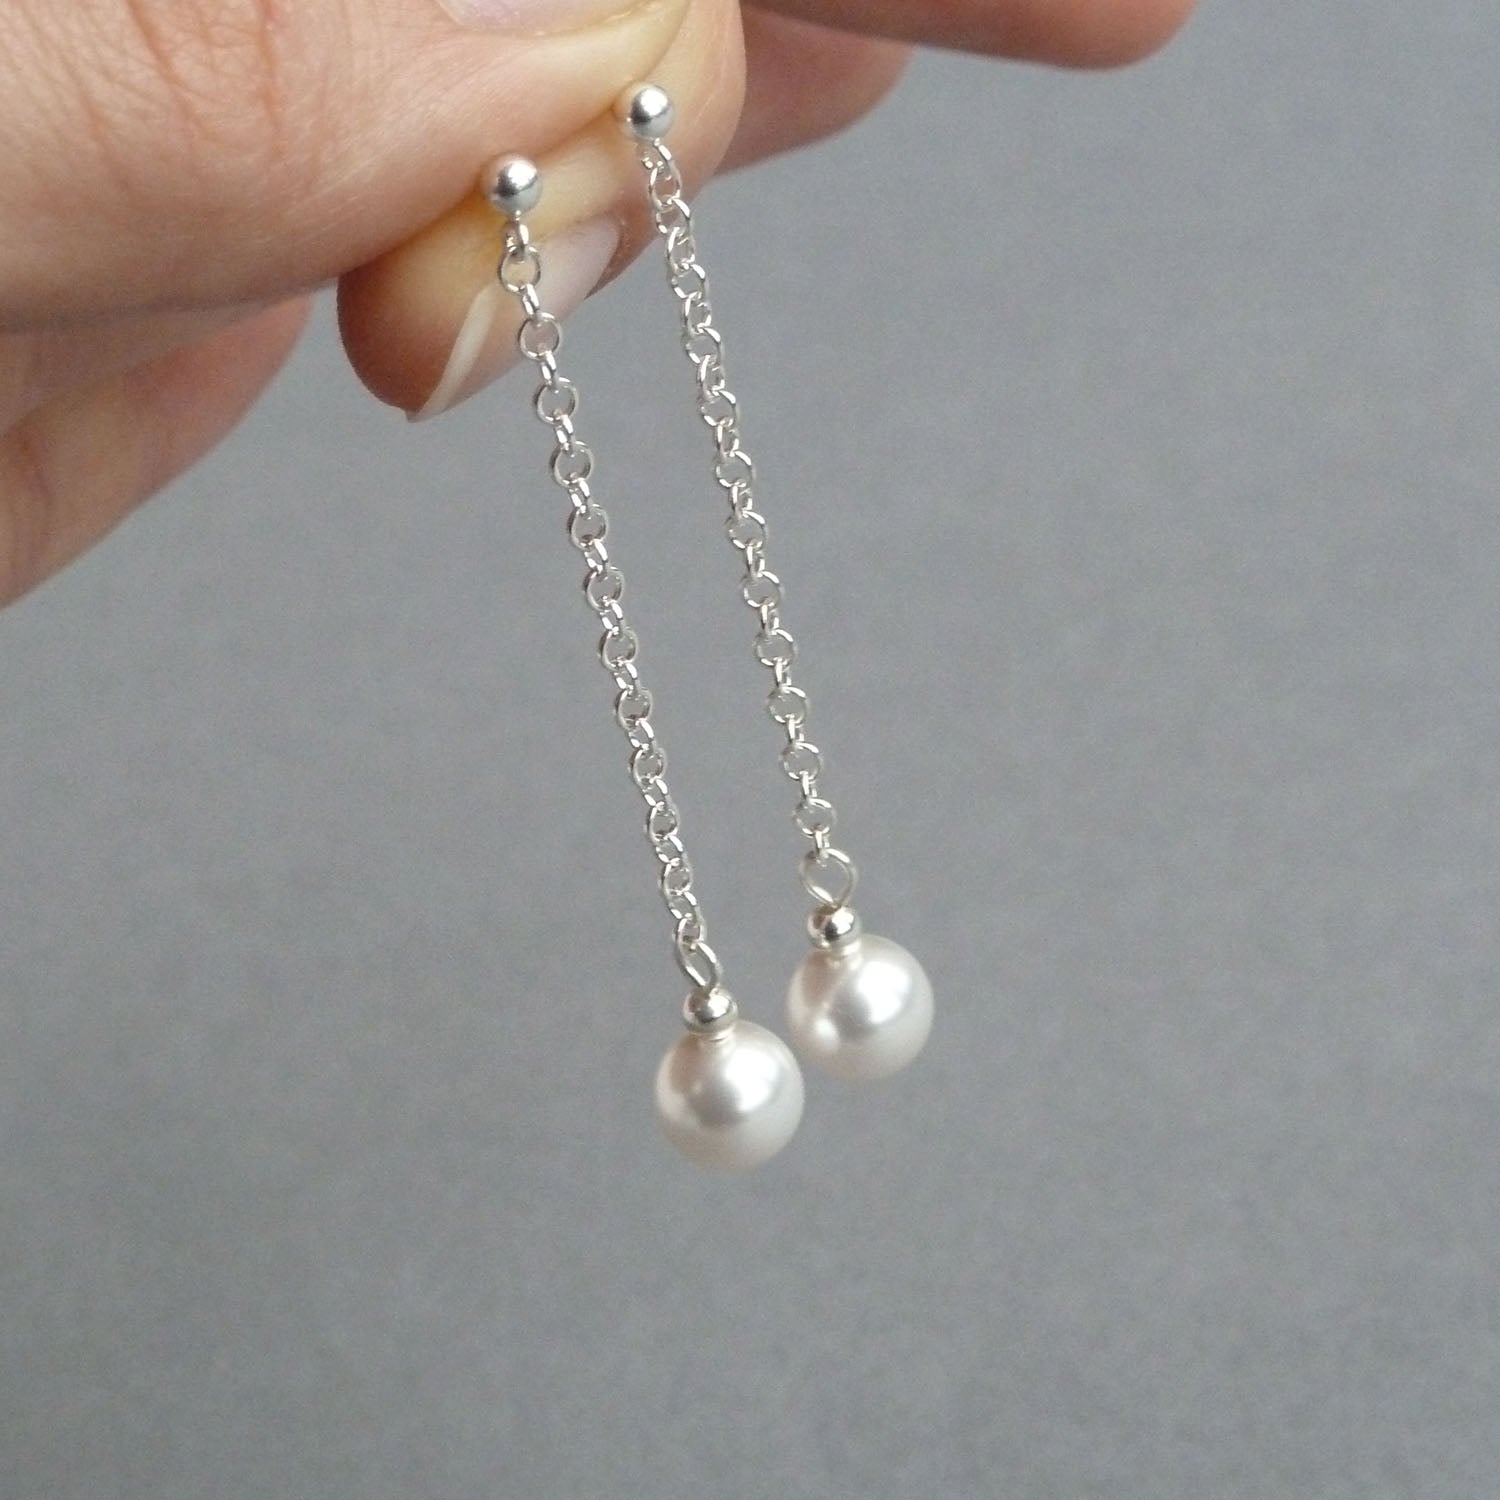 White pearl bridesmaids earrings